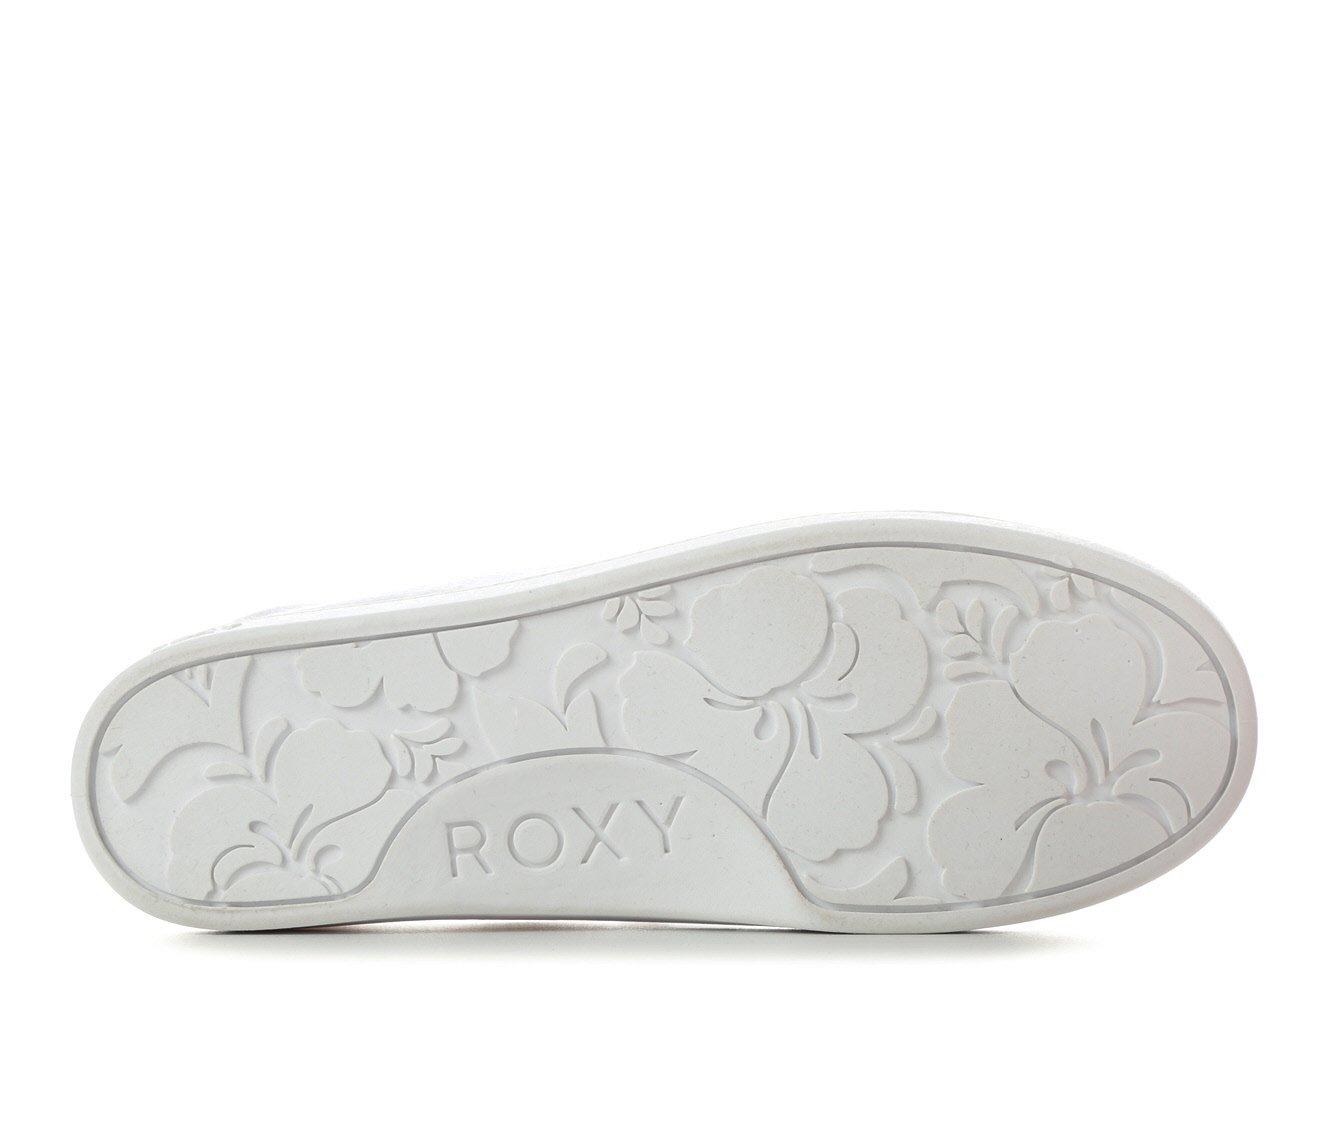 Roxy Women's Bayshore Plus Casual Sneaker